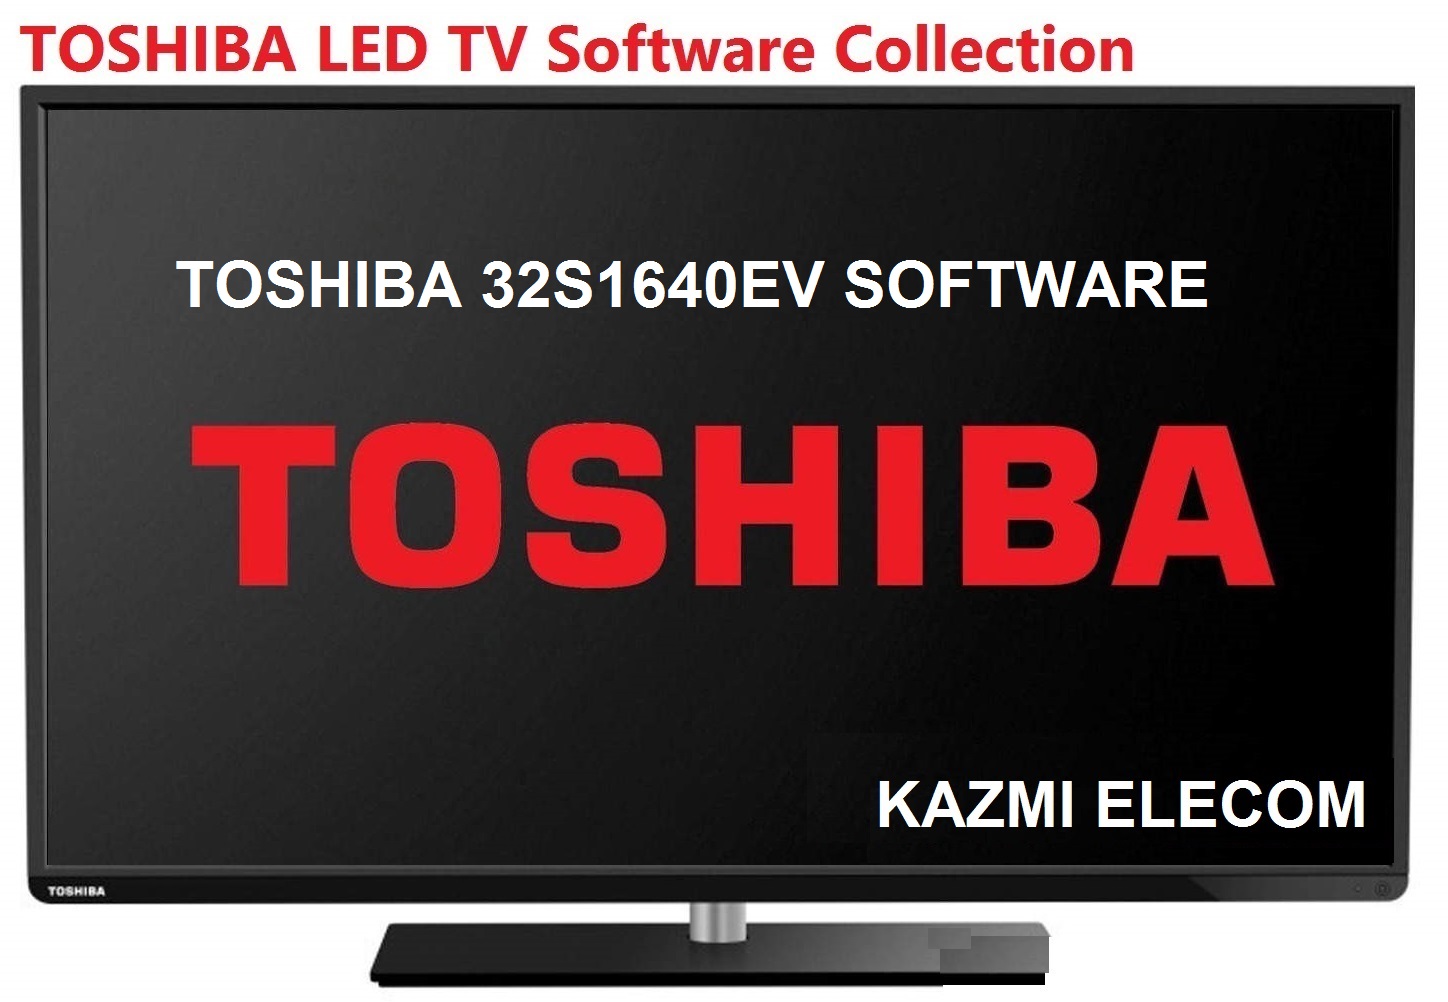 Toshiba 32S1640Ev